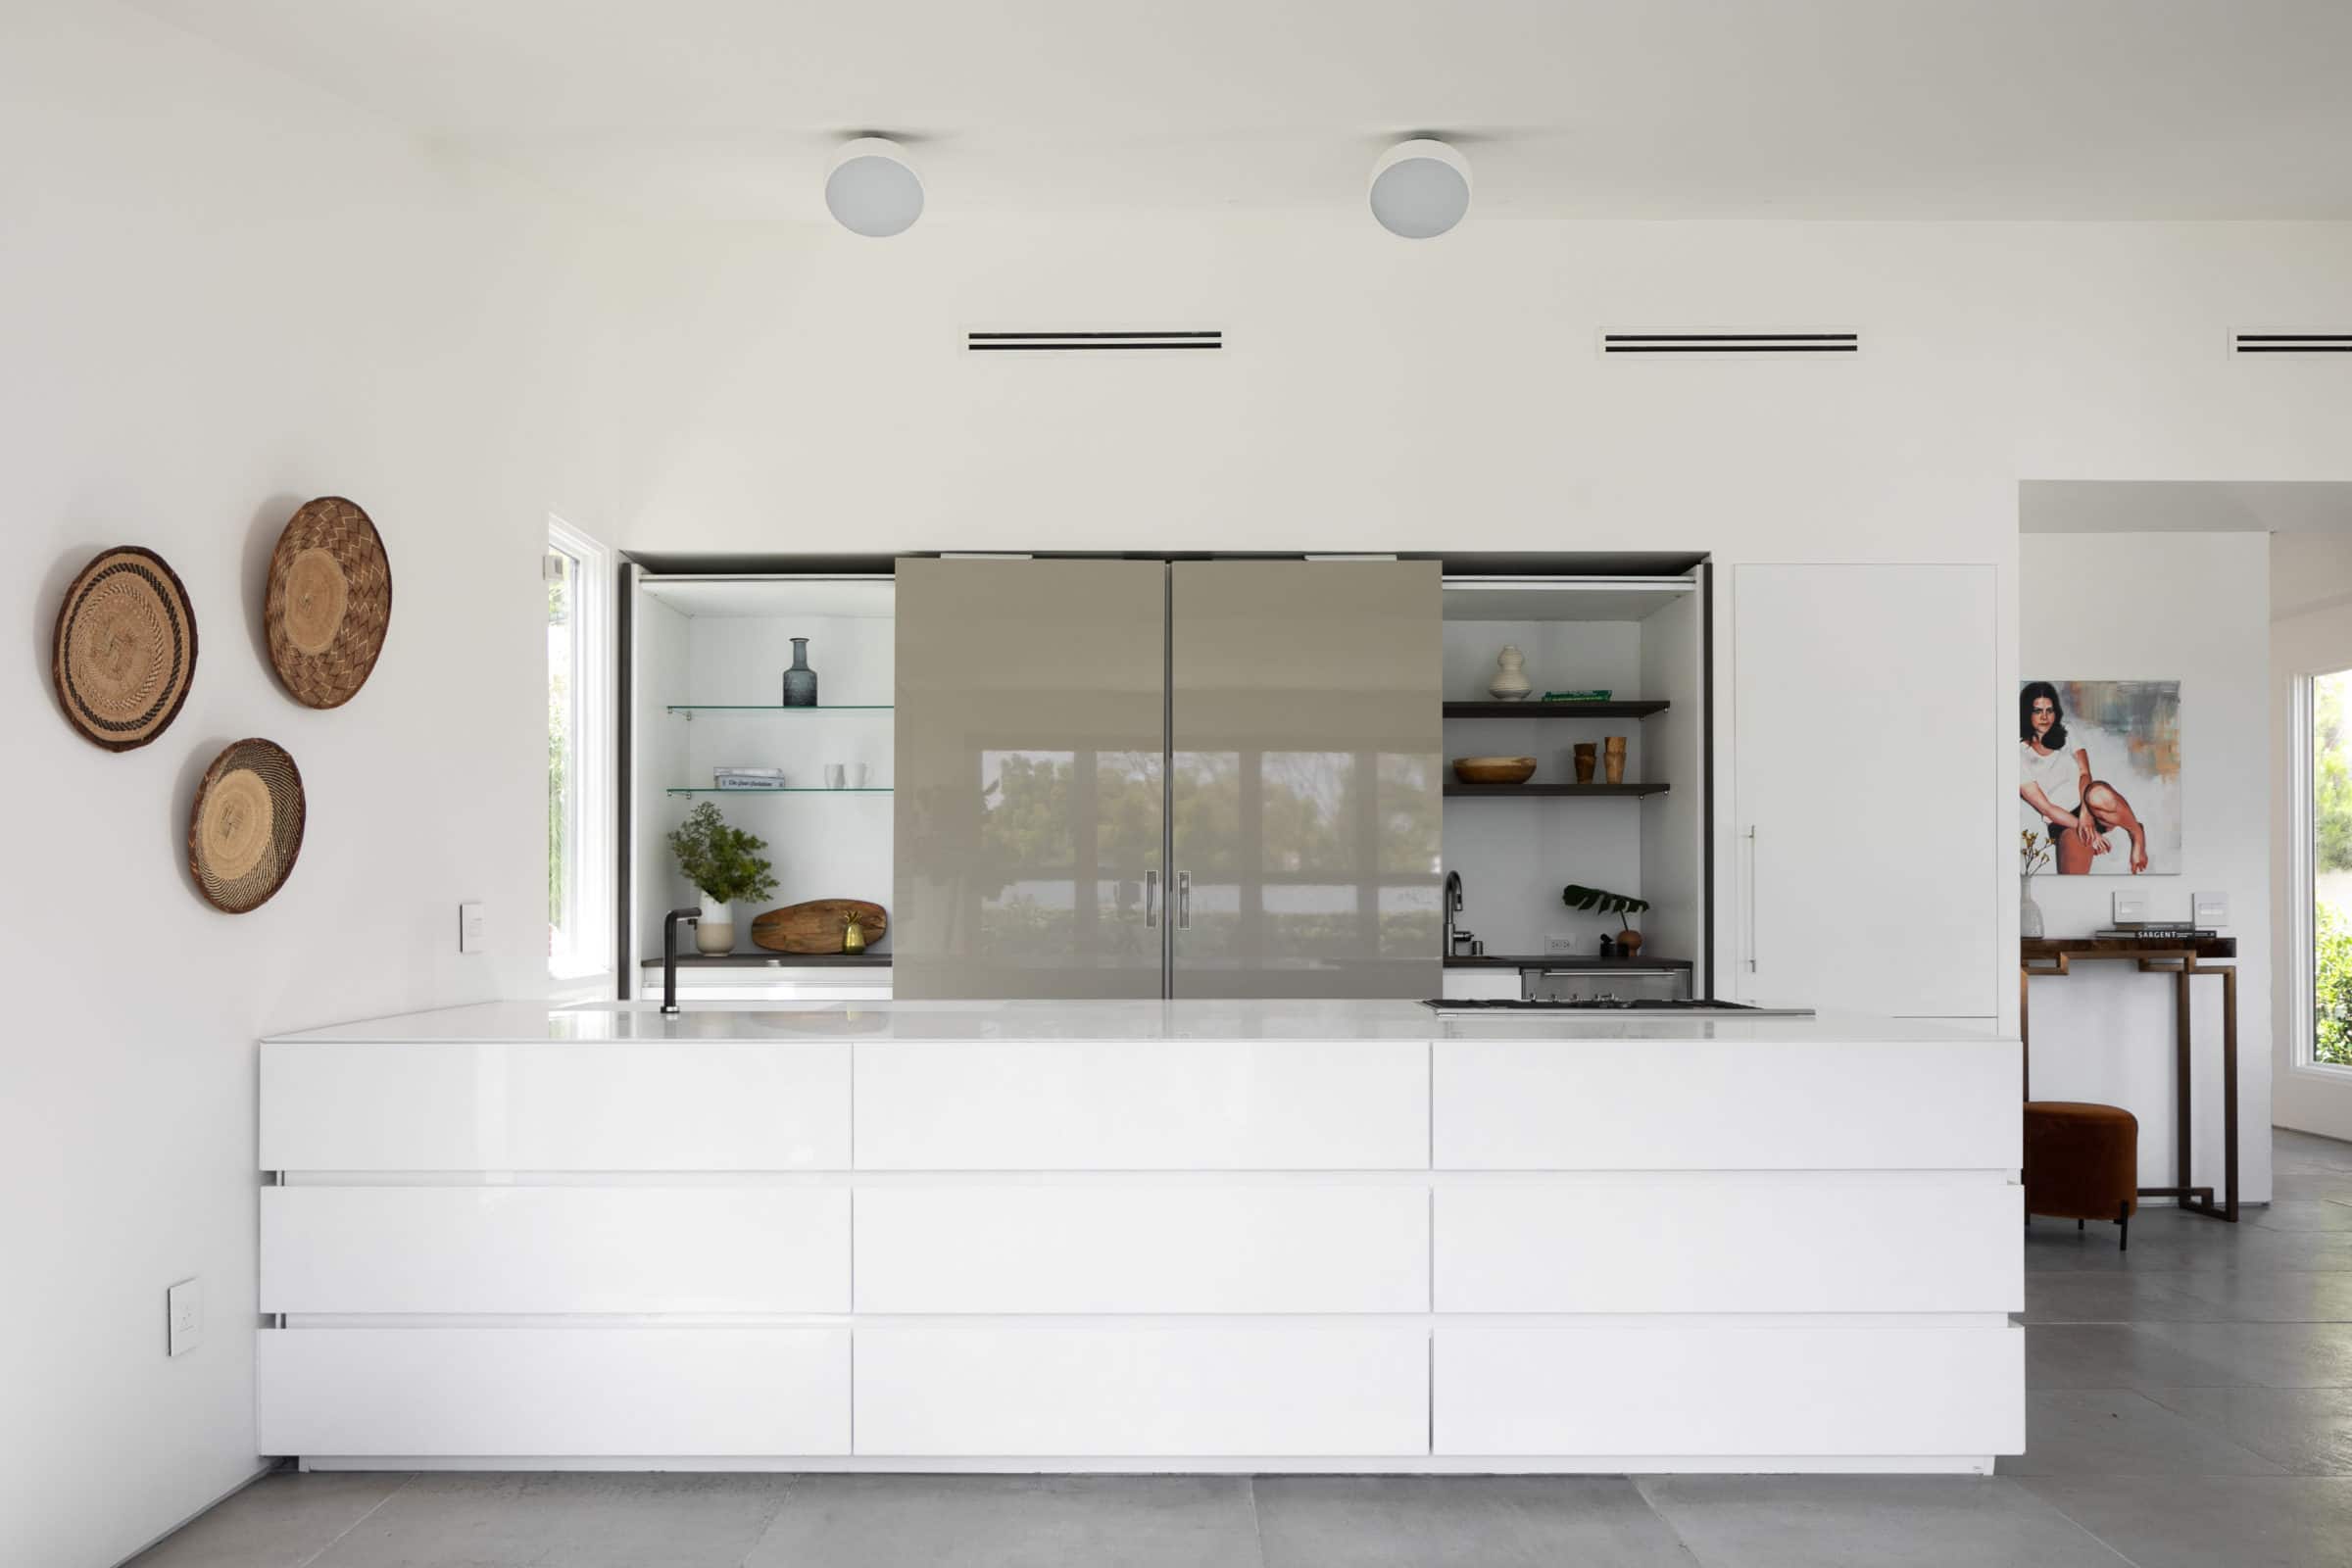 acme real estate kitchen interior blog inspiration los angeles decor